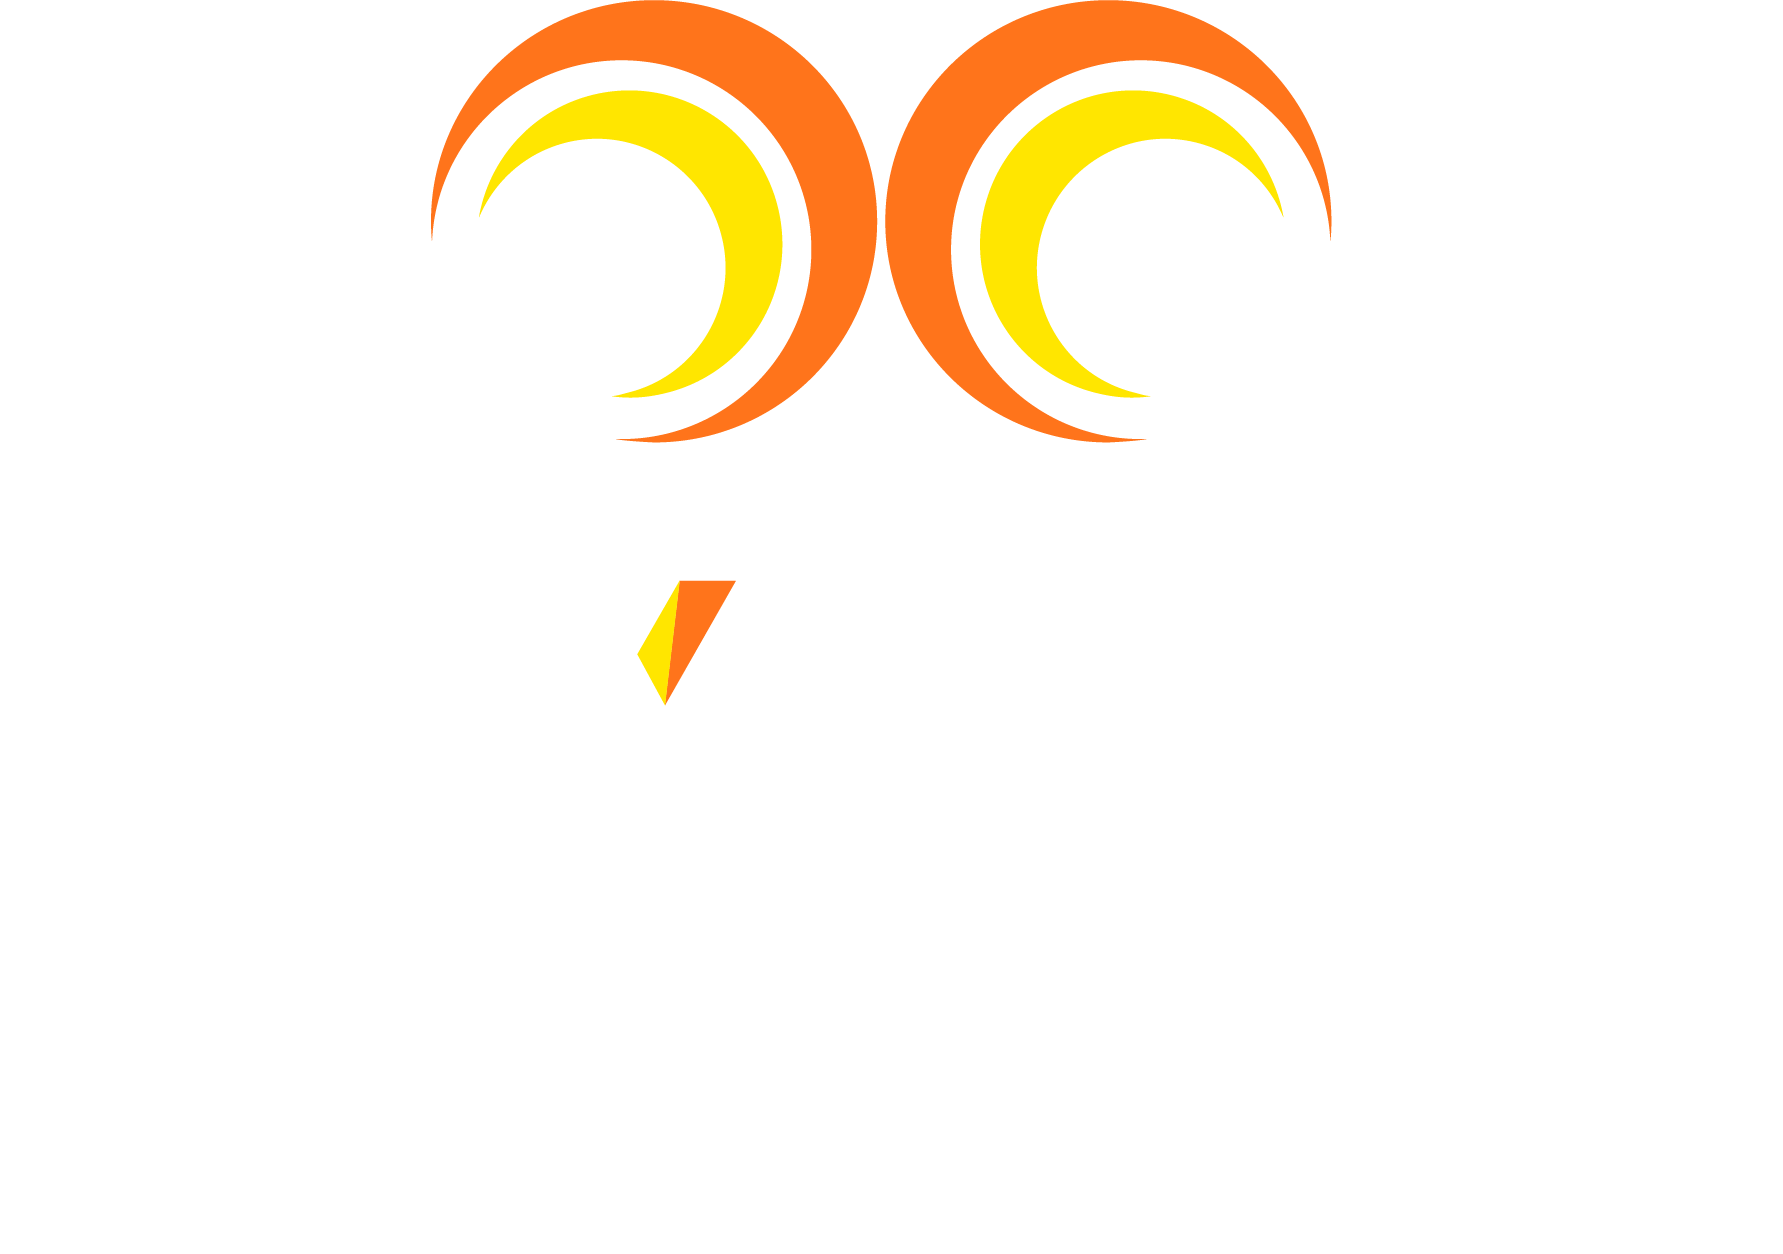 Easy Hotel Kenya